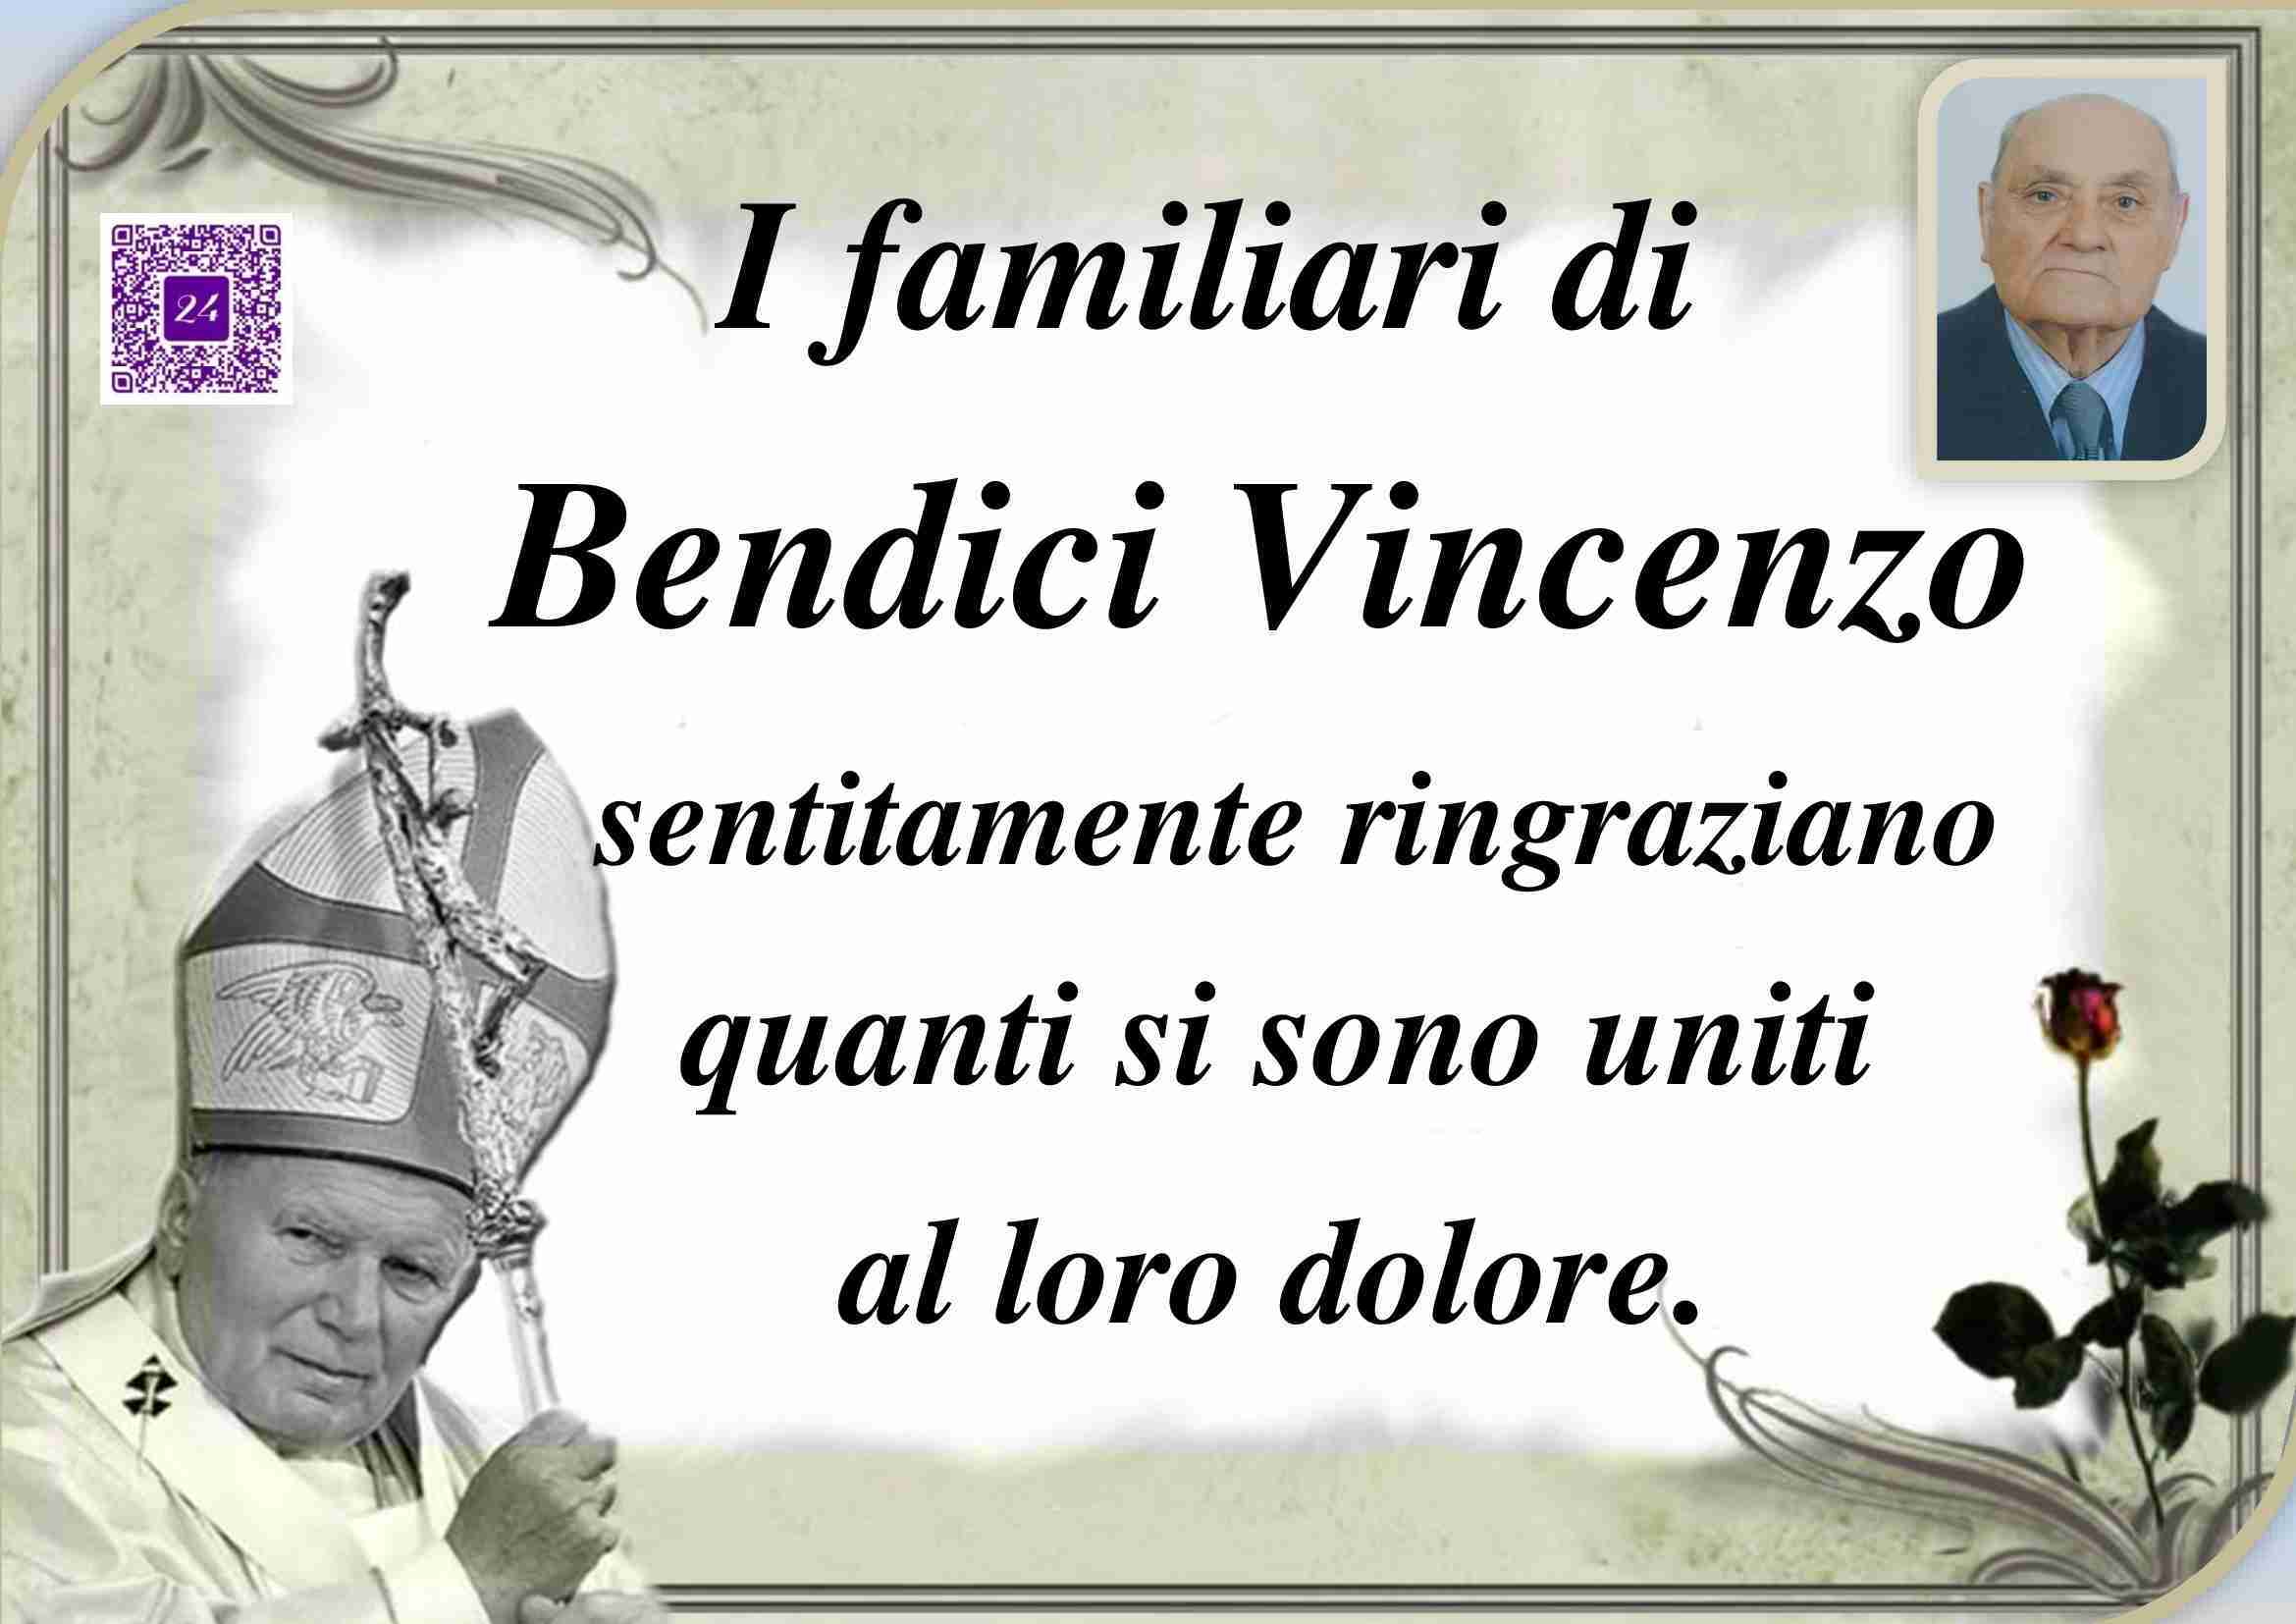 Vincenzo Bendici